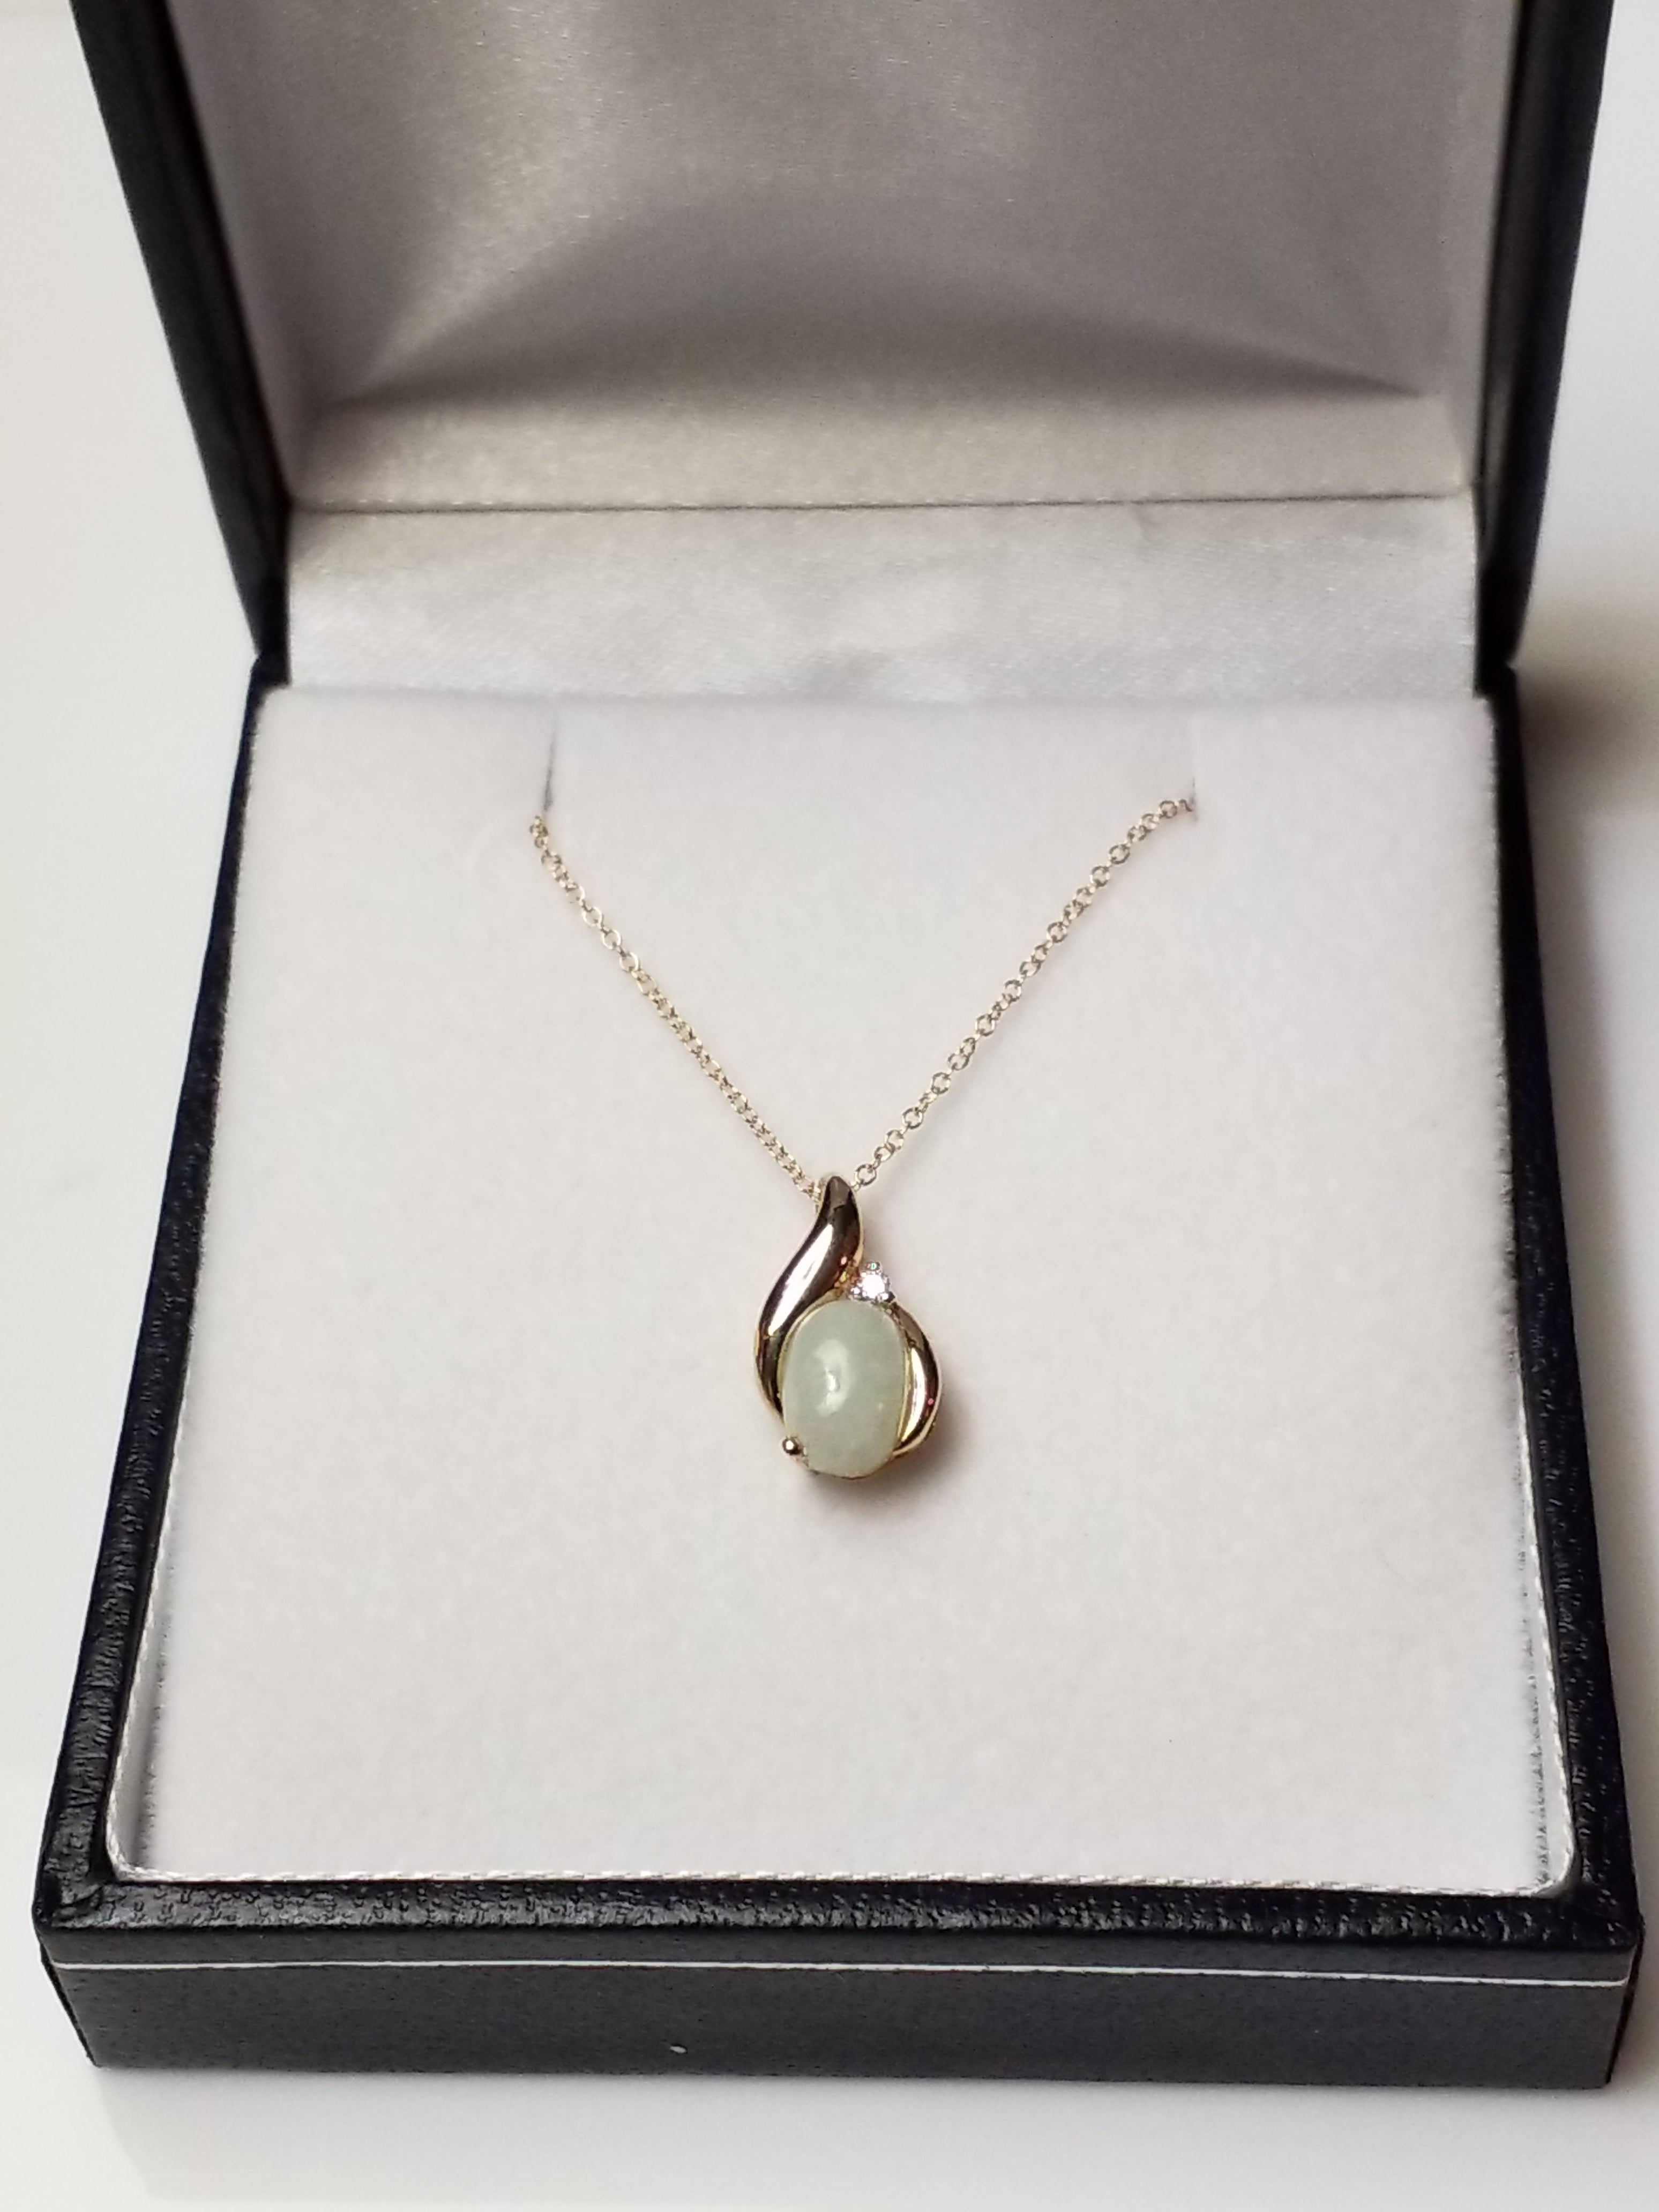 Oval Cut Jade Pendant with Diamond